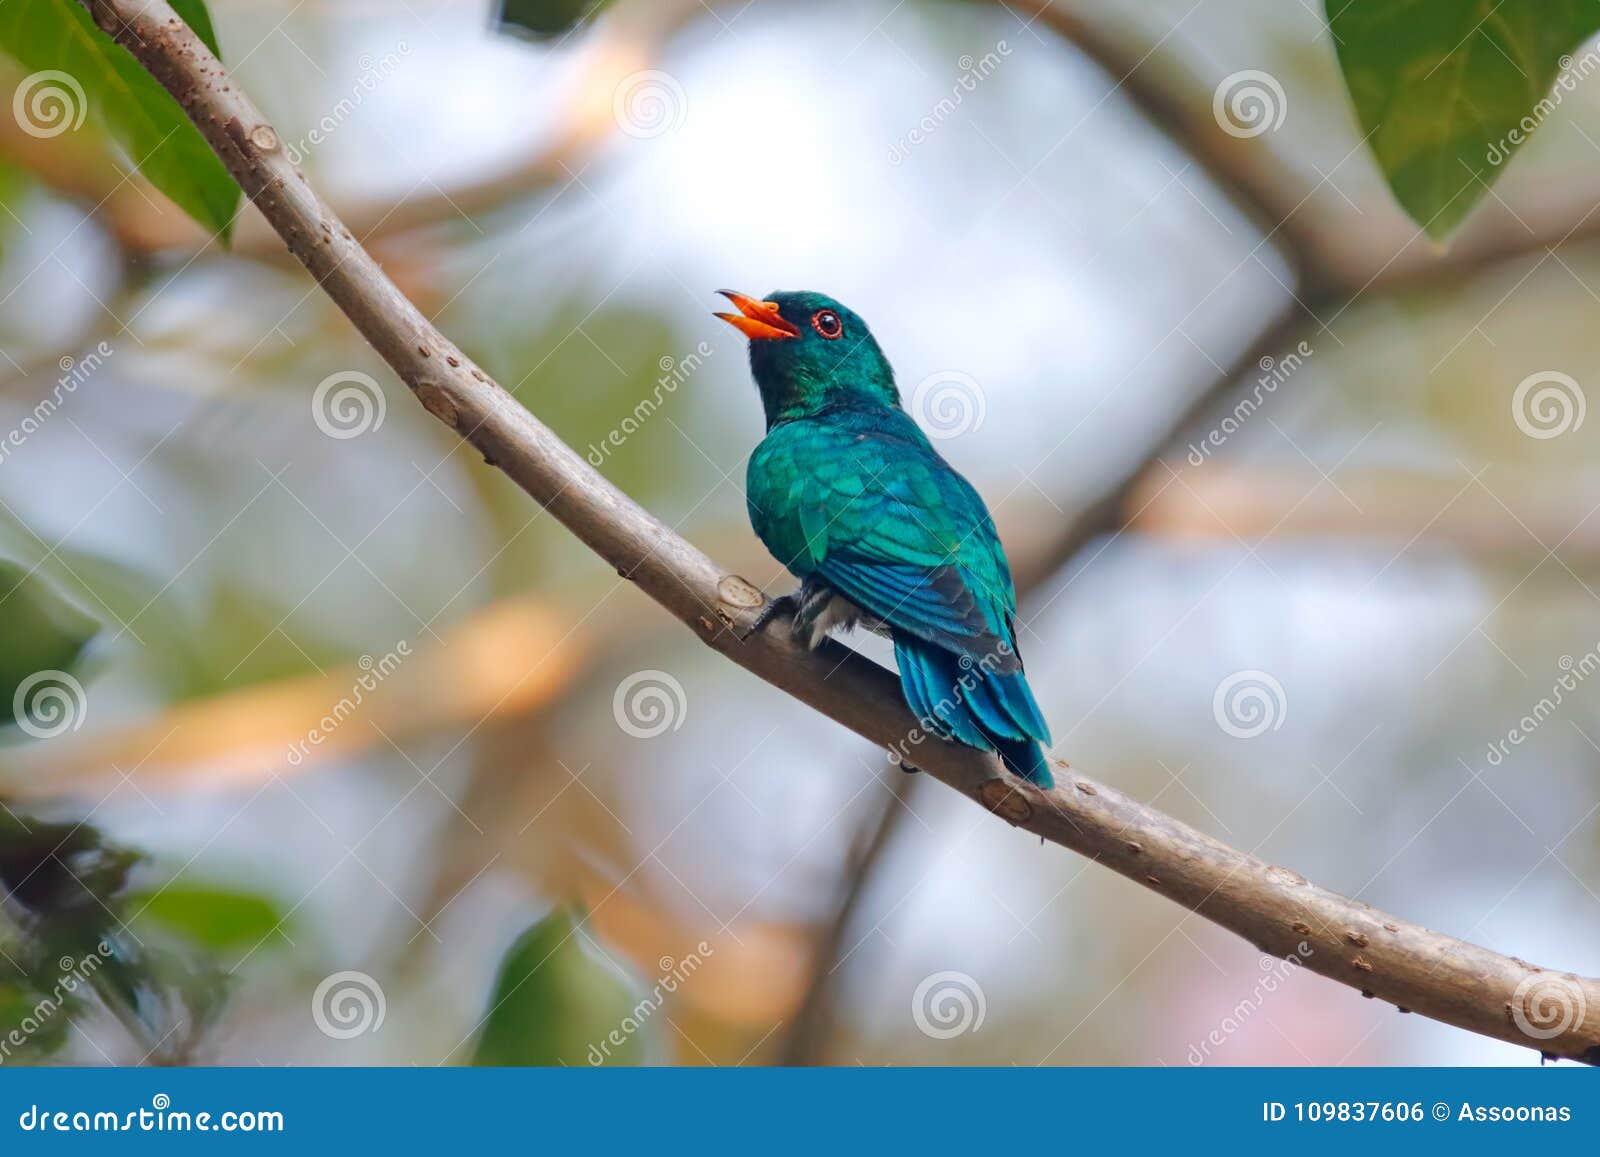 asian emerald cuckoo chrysococcyx maculatus beautiful male birds of thailand